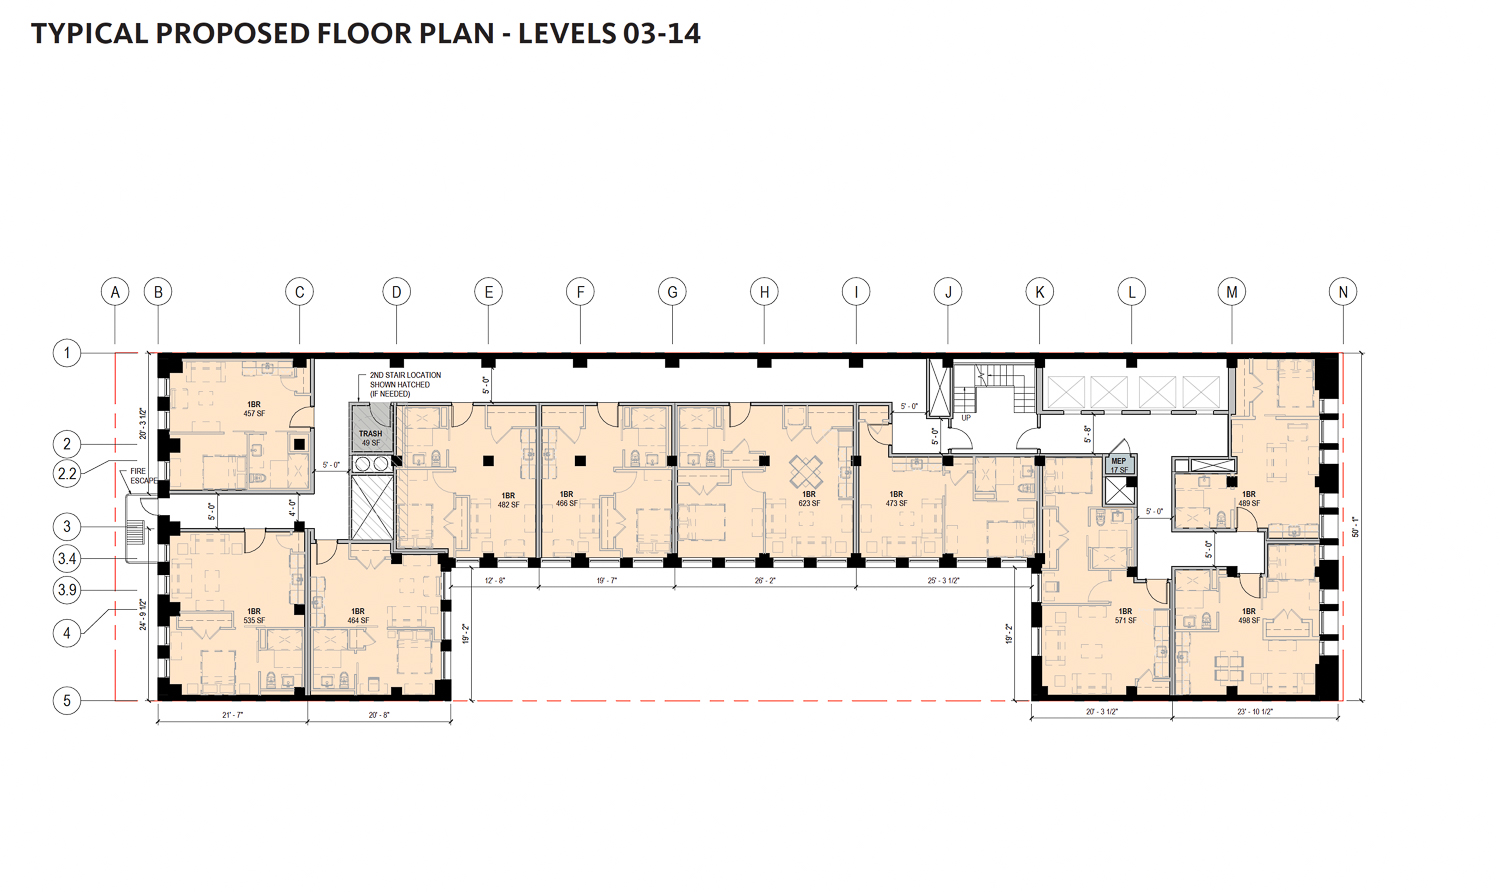 785 Market Street proposed remodeled floor plans for levels three through 14, illustration by Gensler